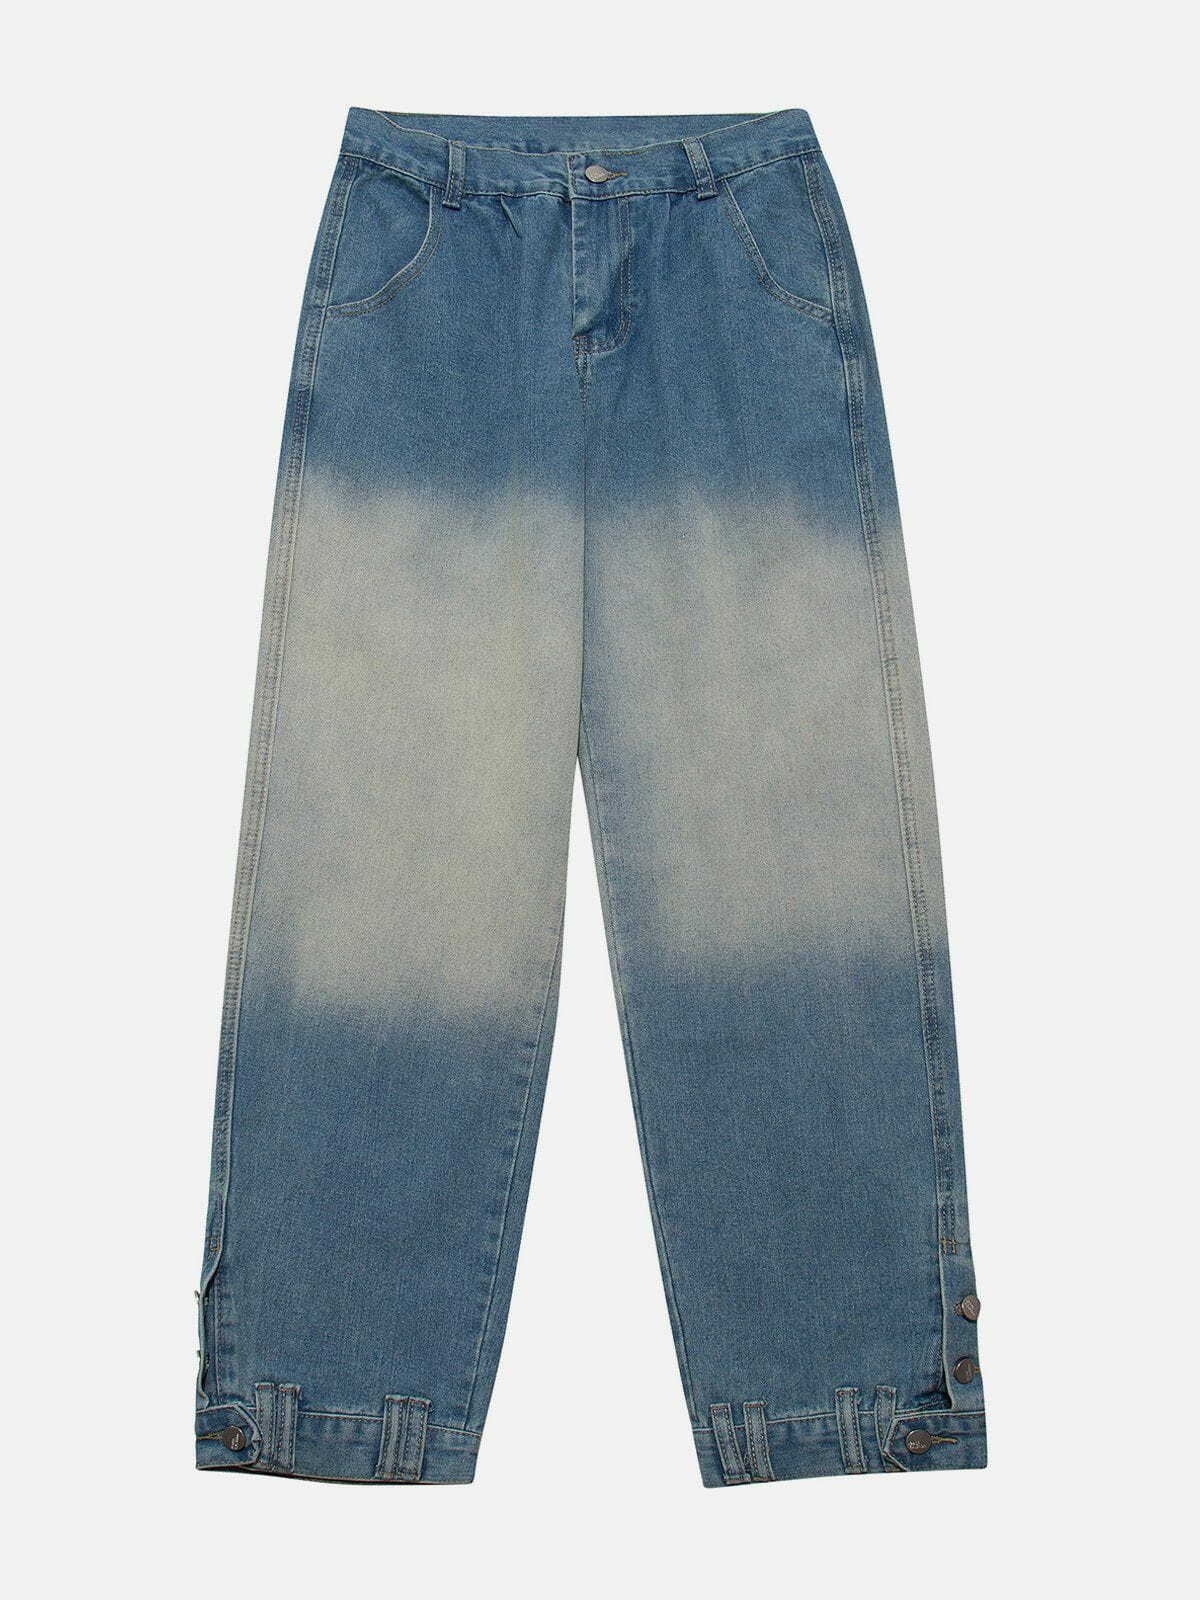 patchwork gradient jeans retro urban chic 8535